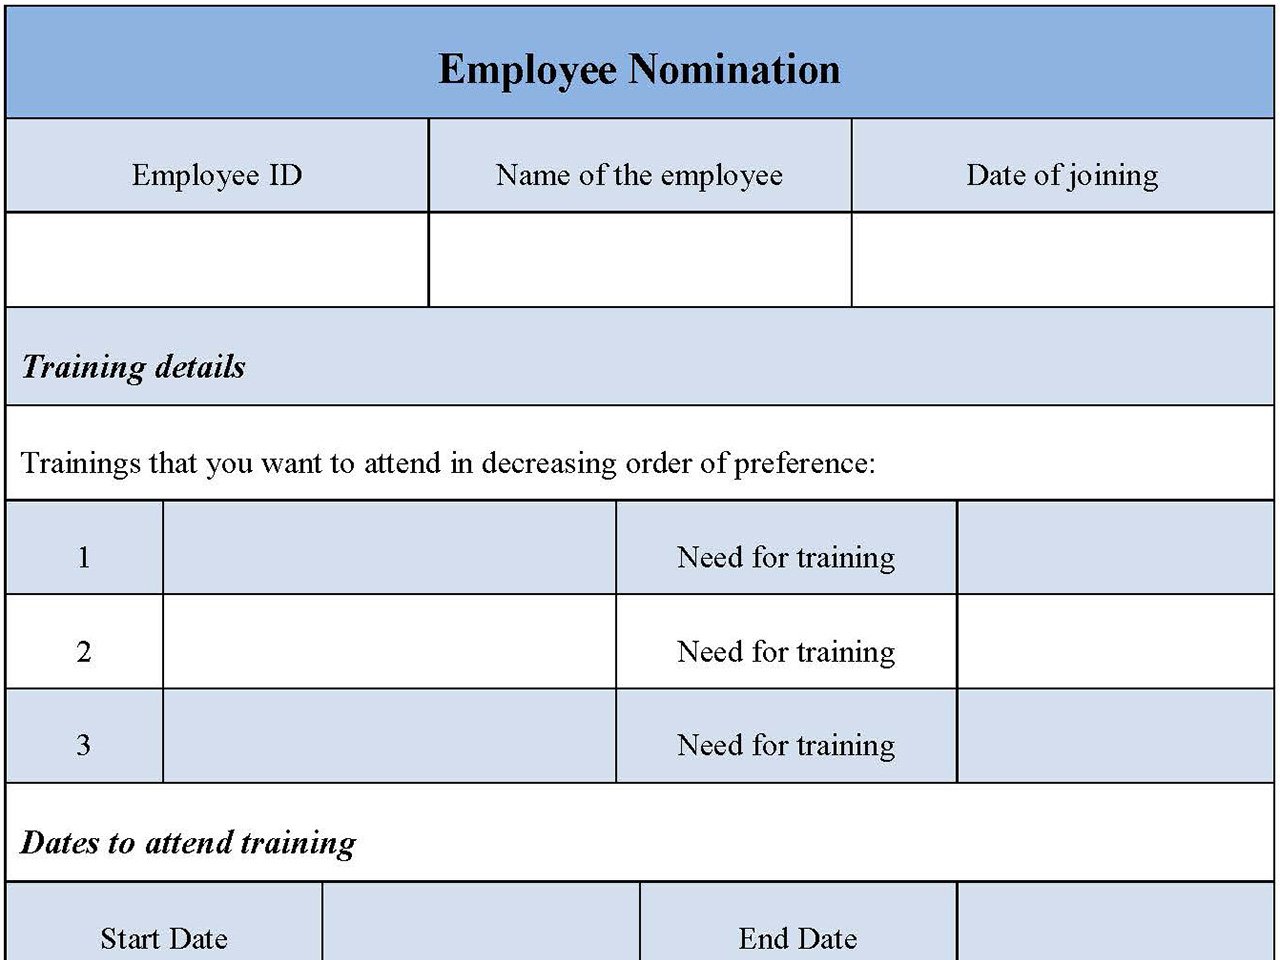 Employee Nomination Form